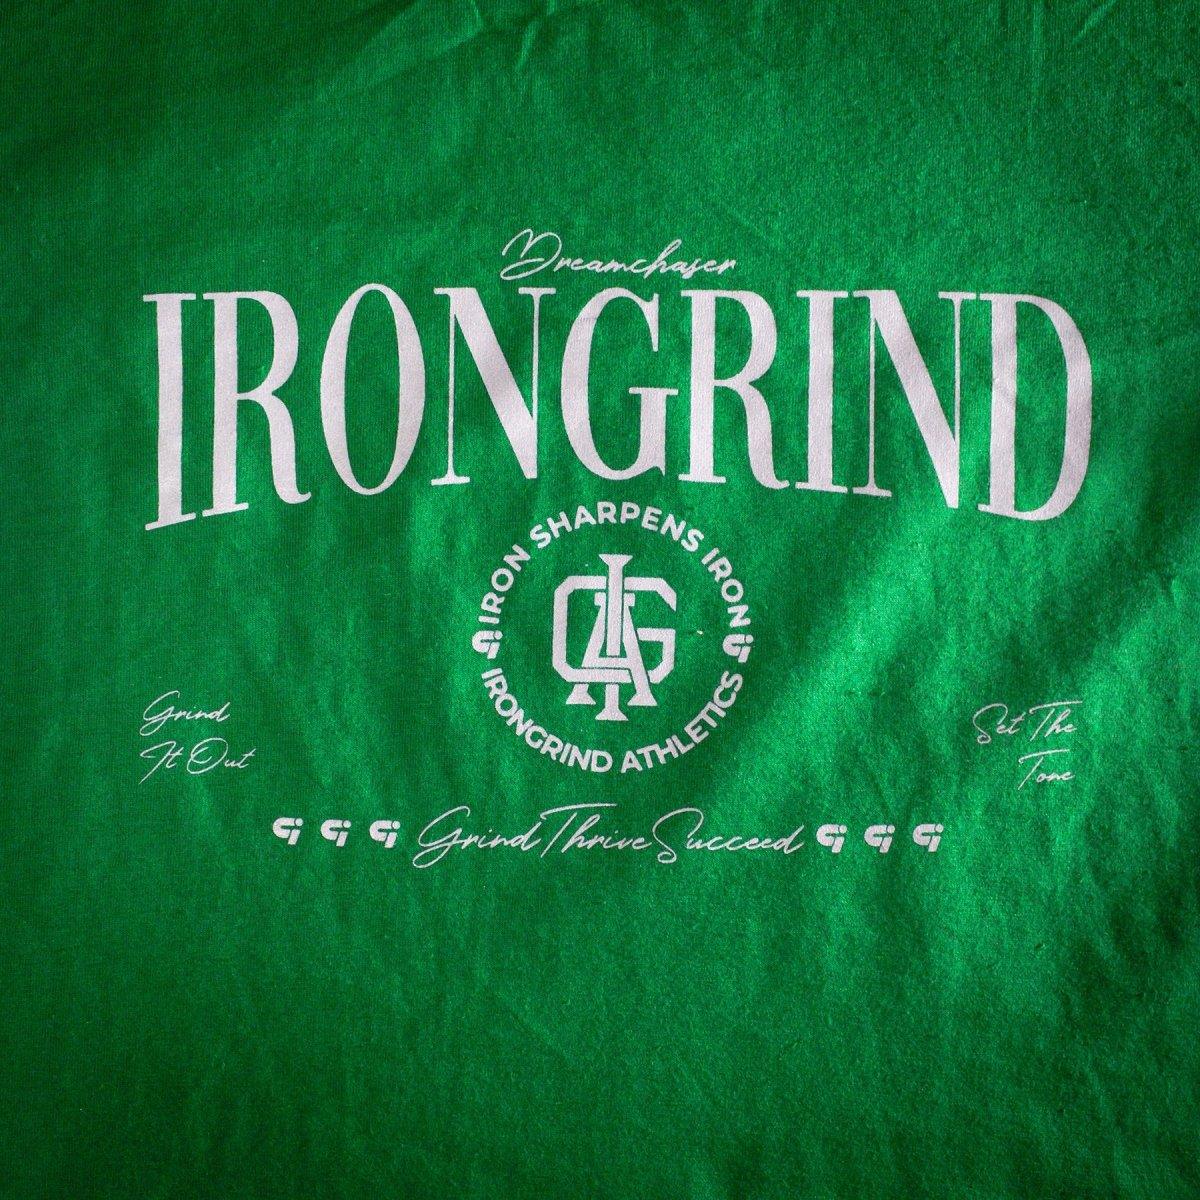 Incarnate Vintage Crop Top - Green - IronGrind Athletics - activewear - gymshark - alphalete